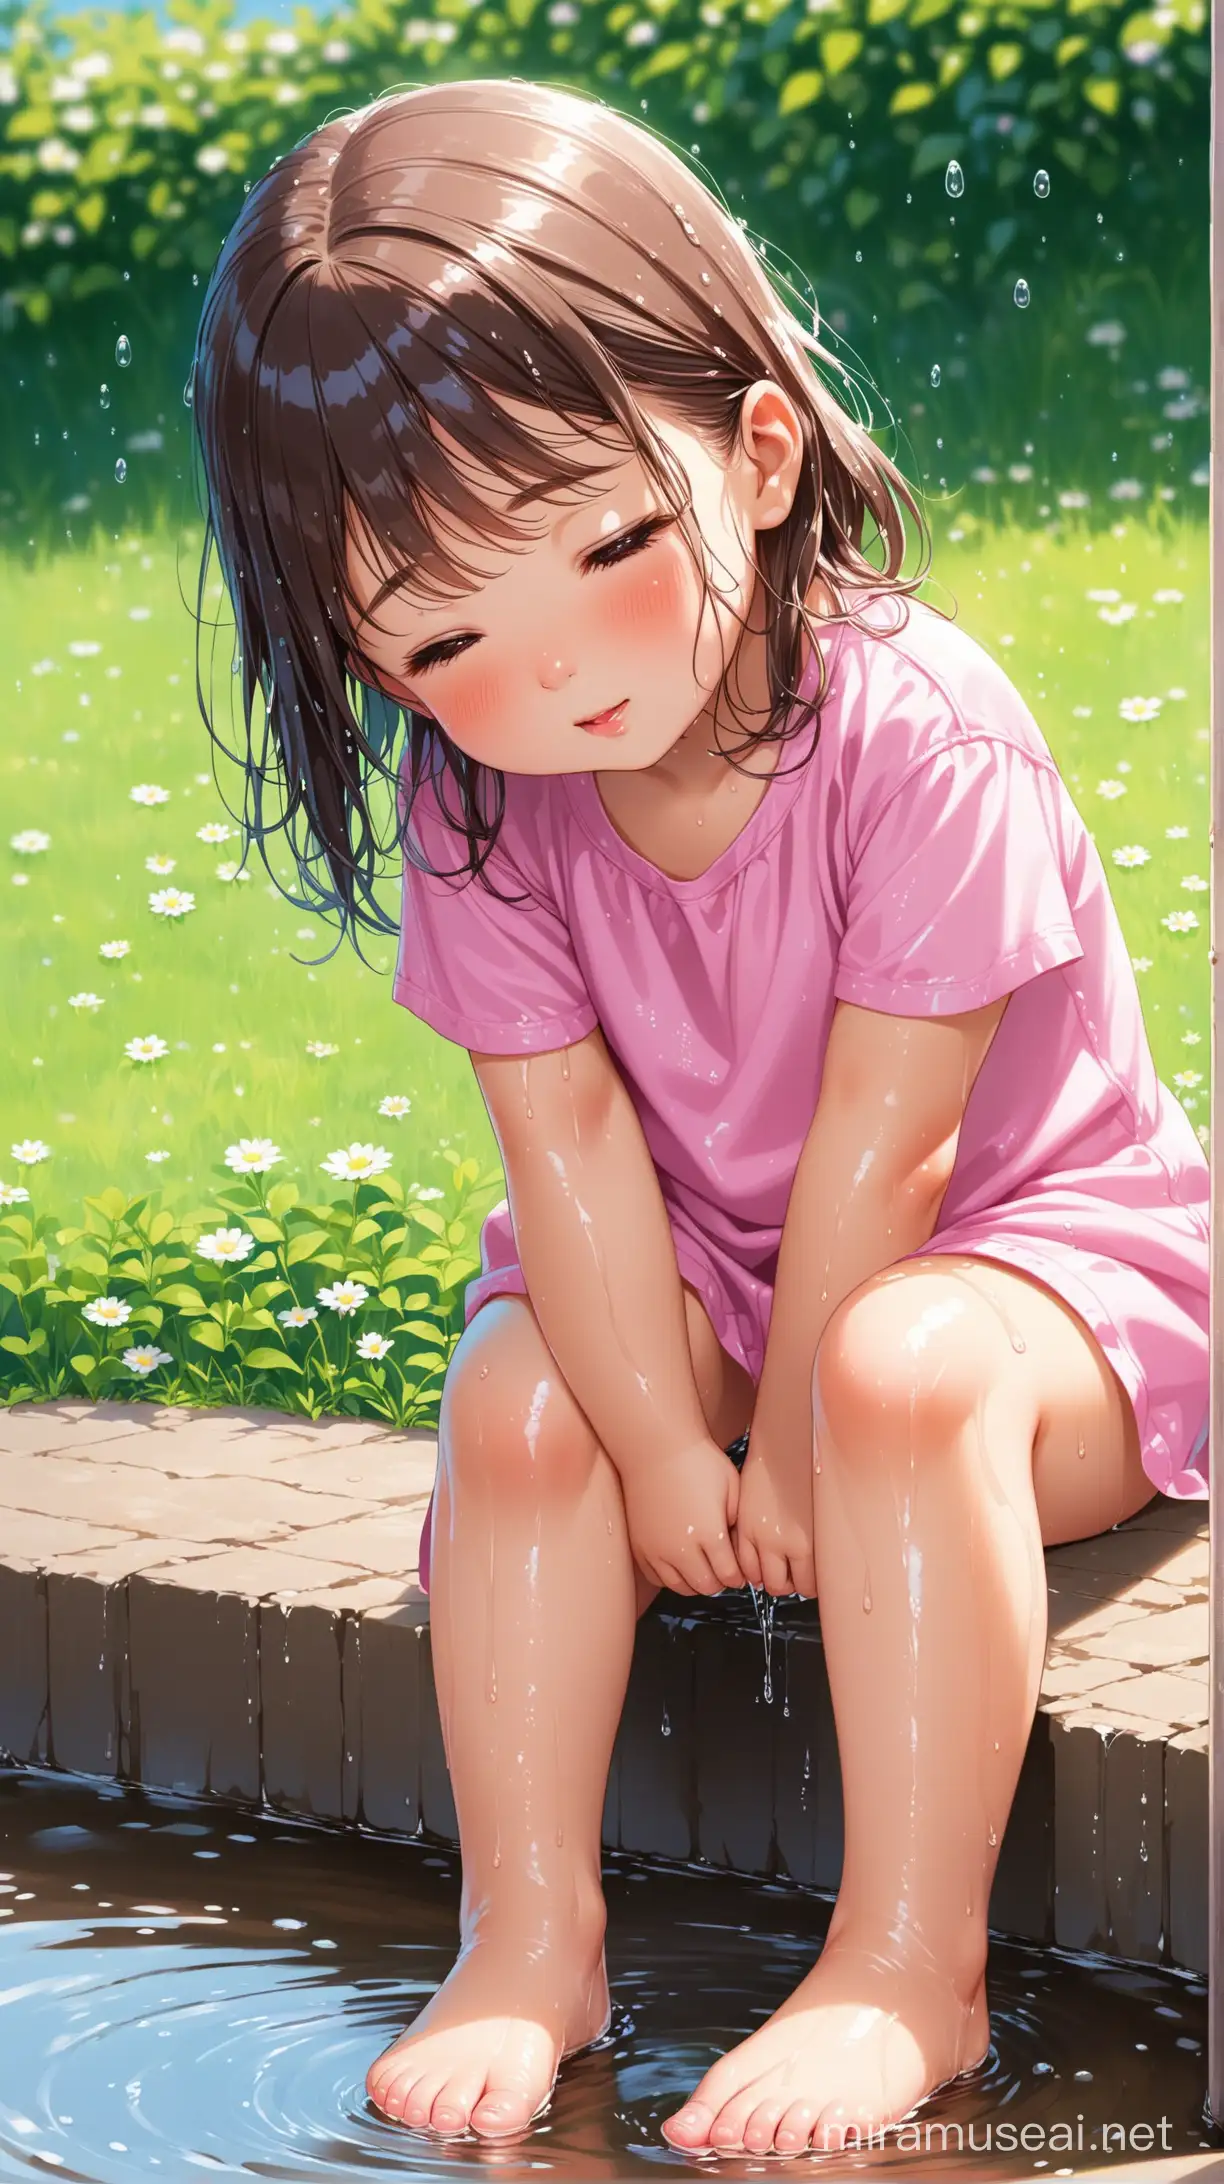 Little girl wet feet